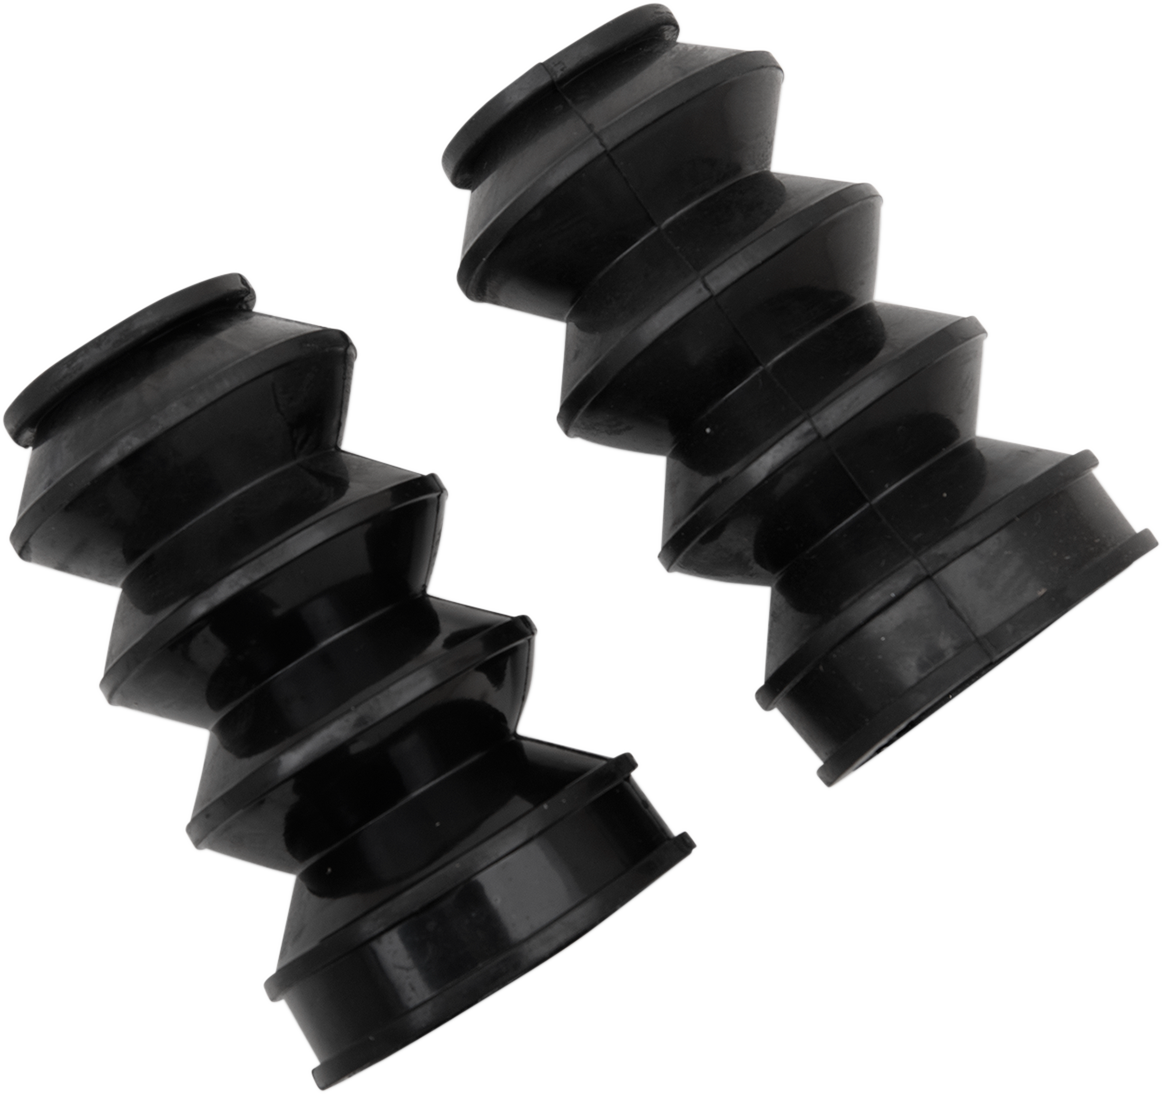 Drag Specialties 39mm Black Rubber 5" Front Fork Boots for Harley Davidson